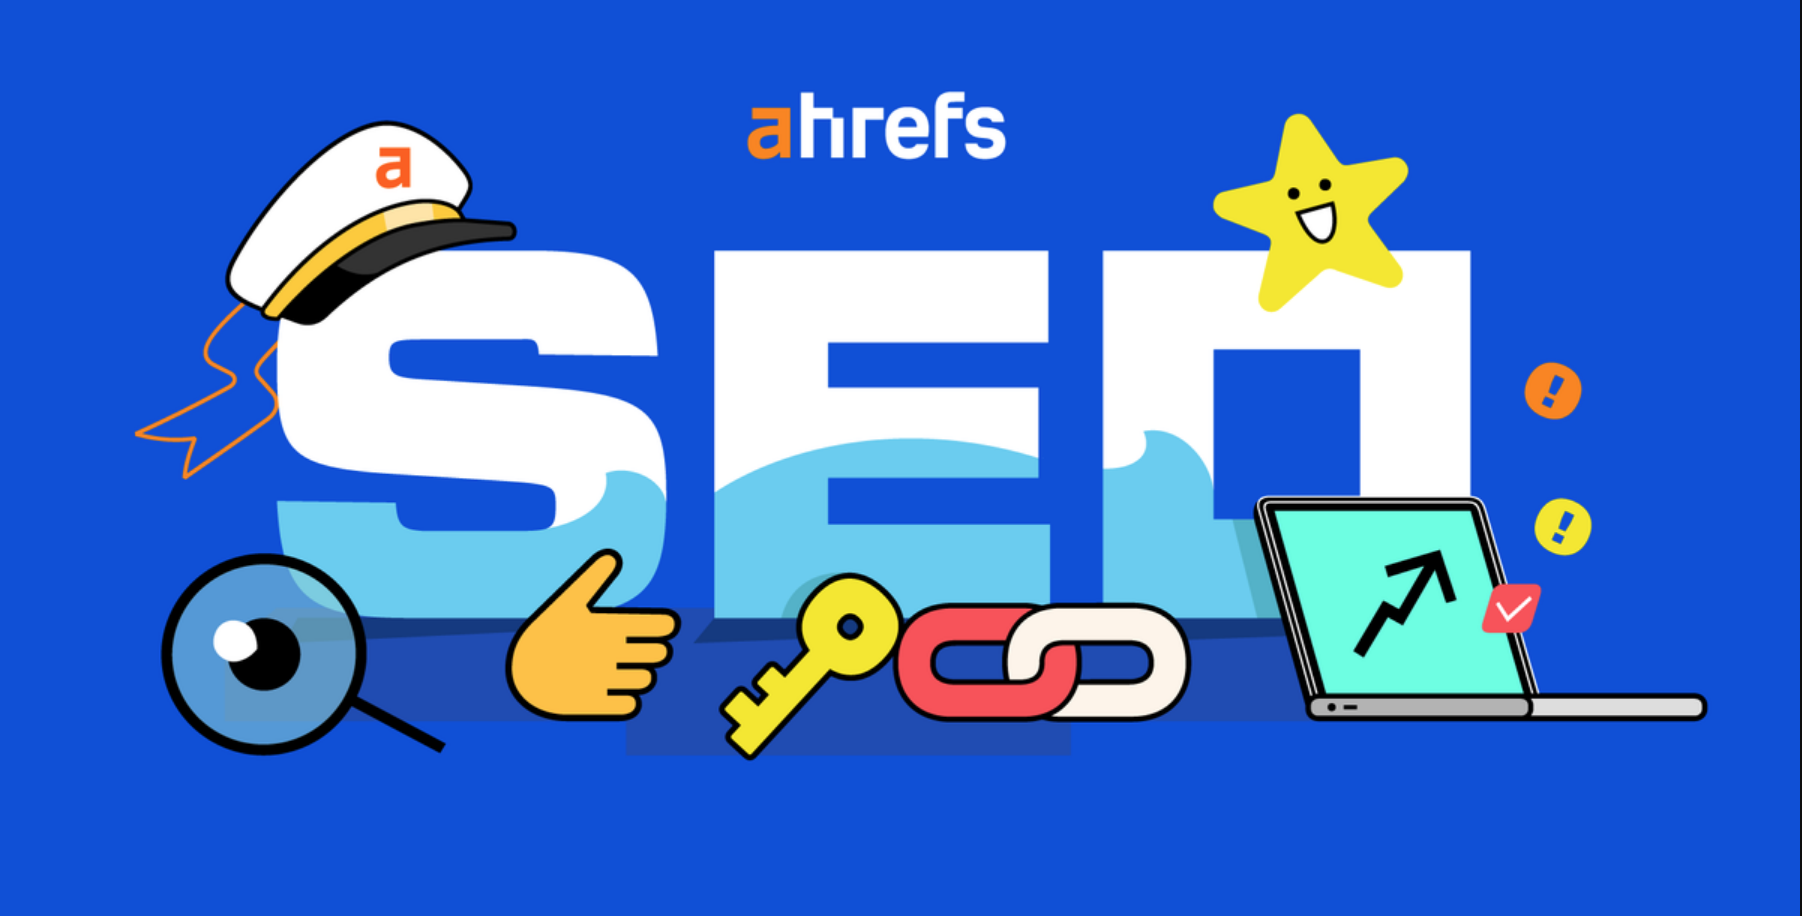 Ahrefs' Keywords Generator cover image